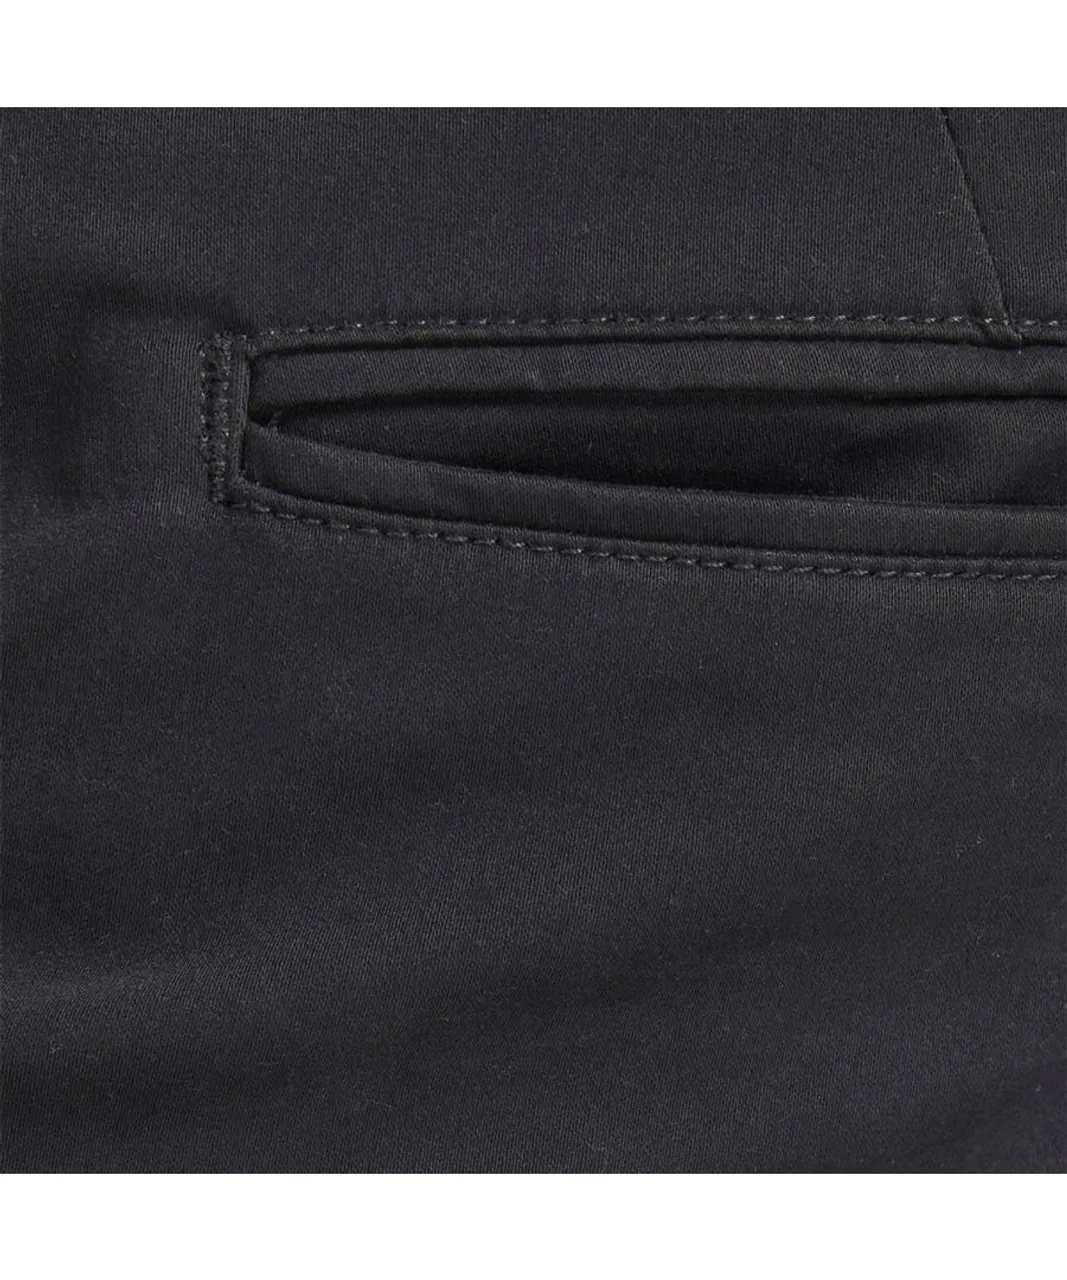 Jack & Jones Mens chino trousers - Black Cotton